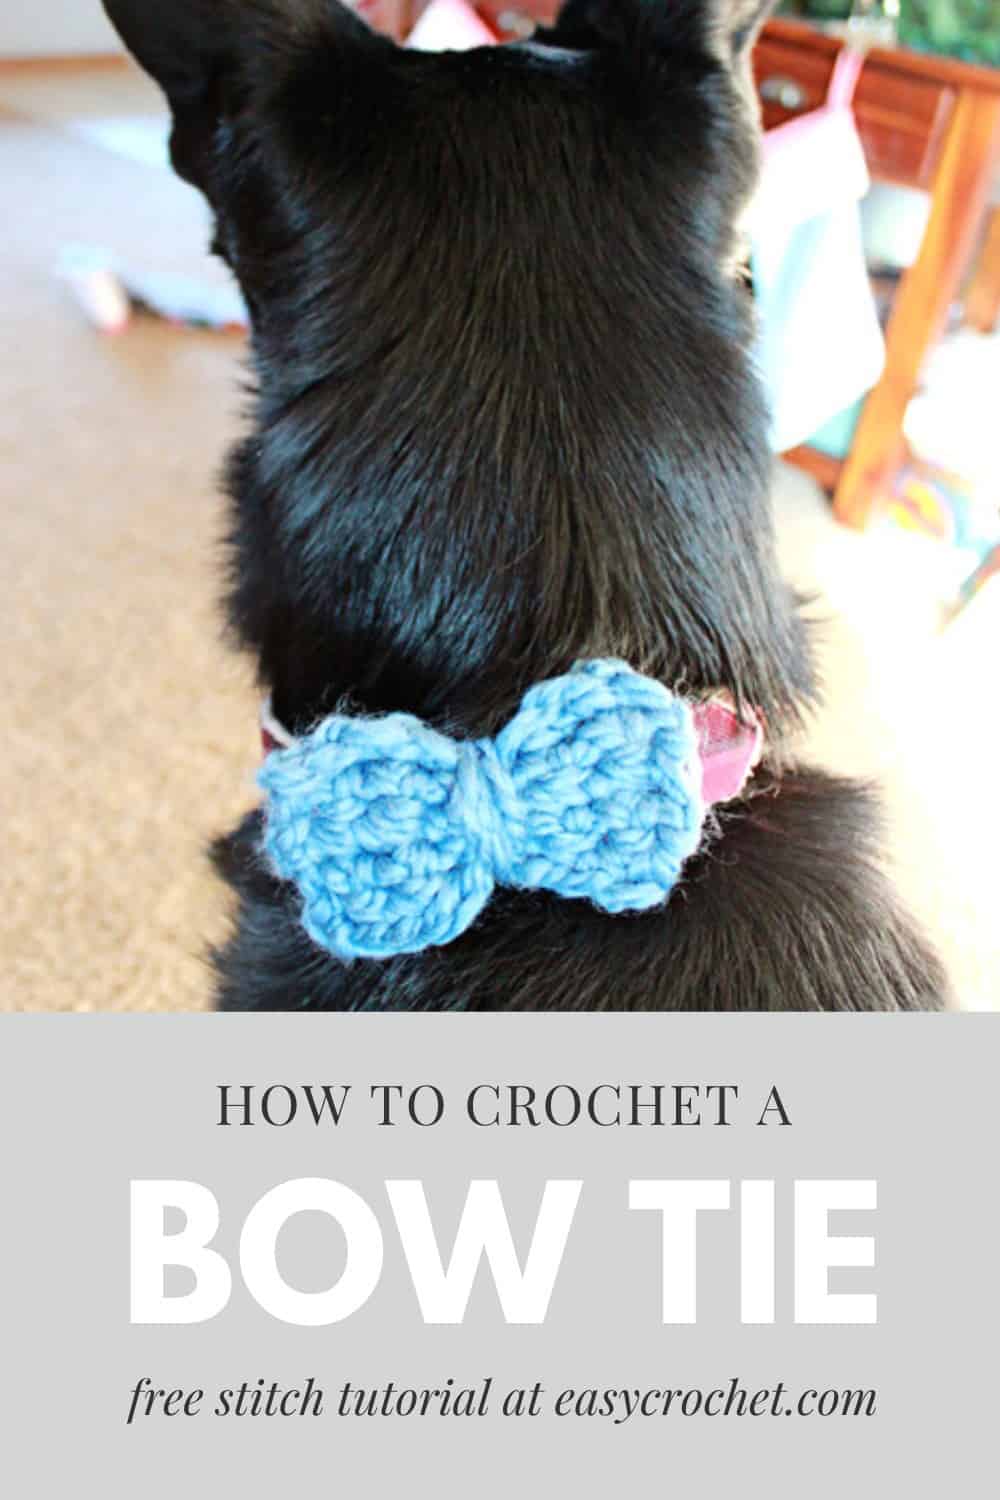 Free Crochet Bow Tie Pattern from Easy Crochet at easycrochet.com via @easycrochetcom